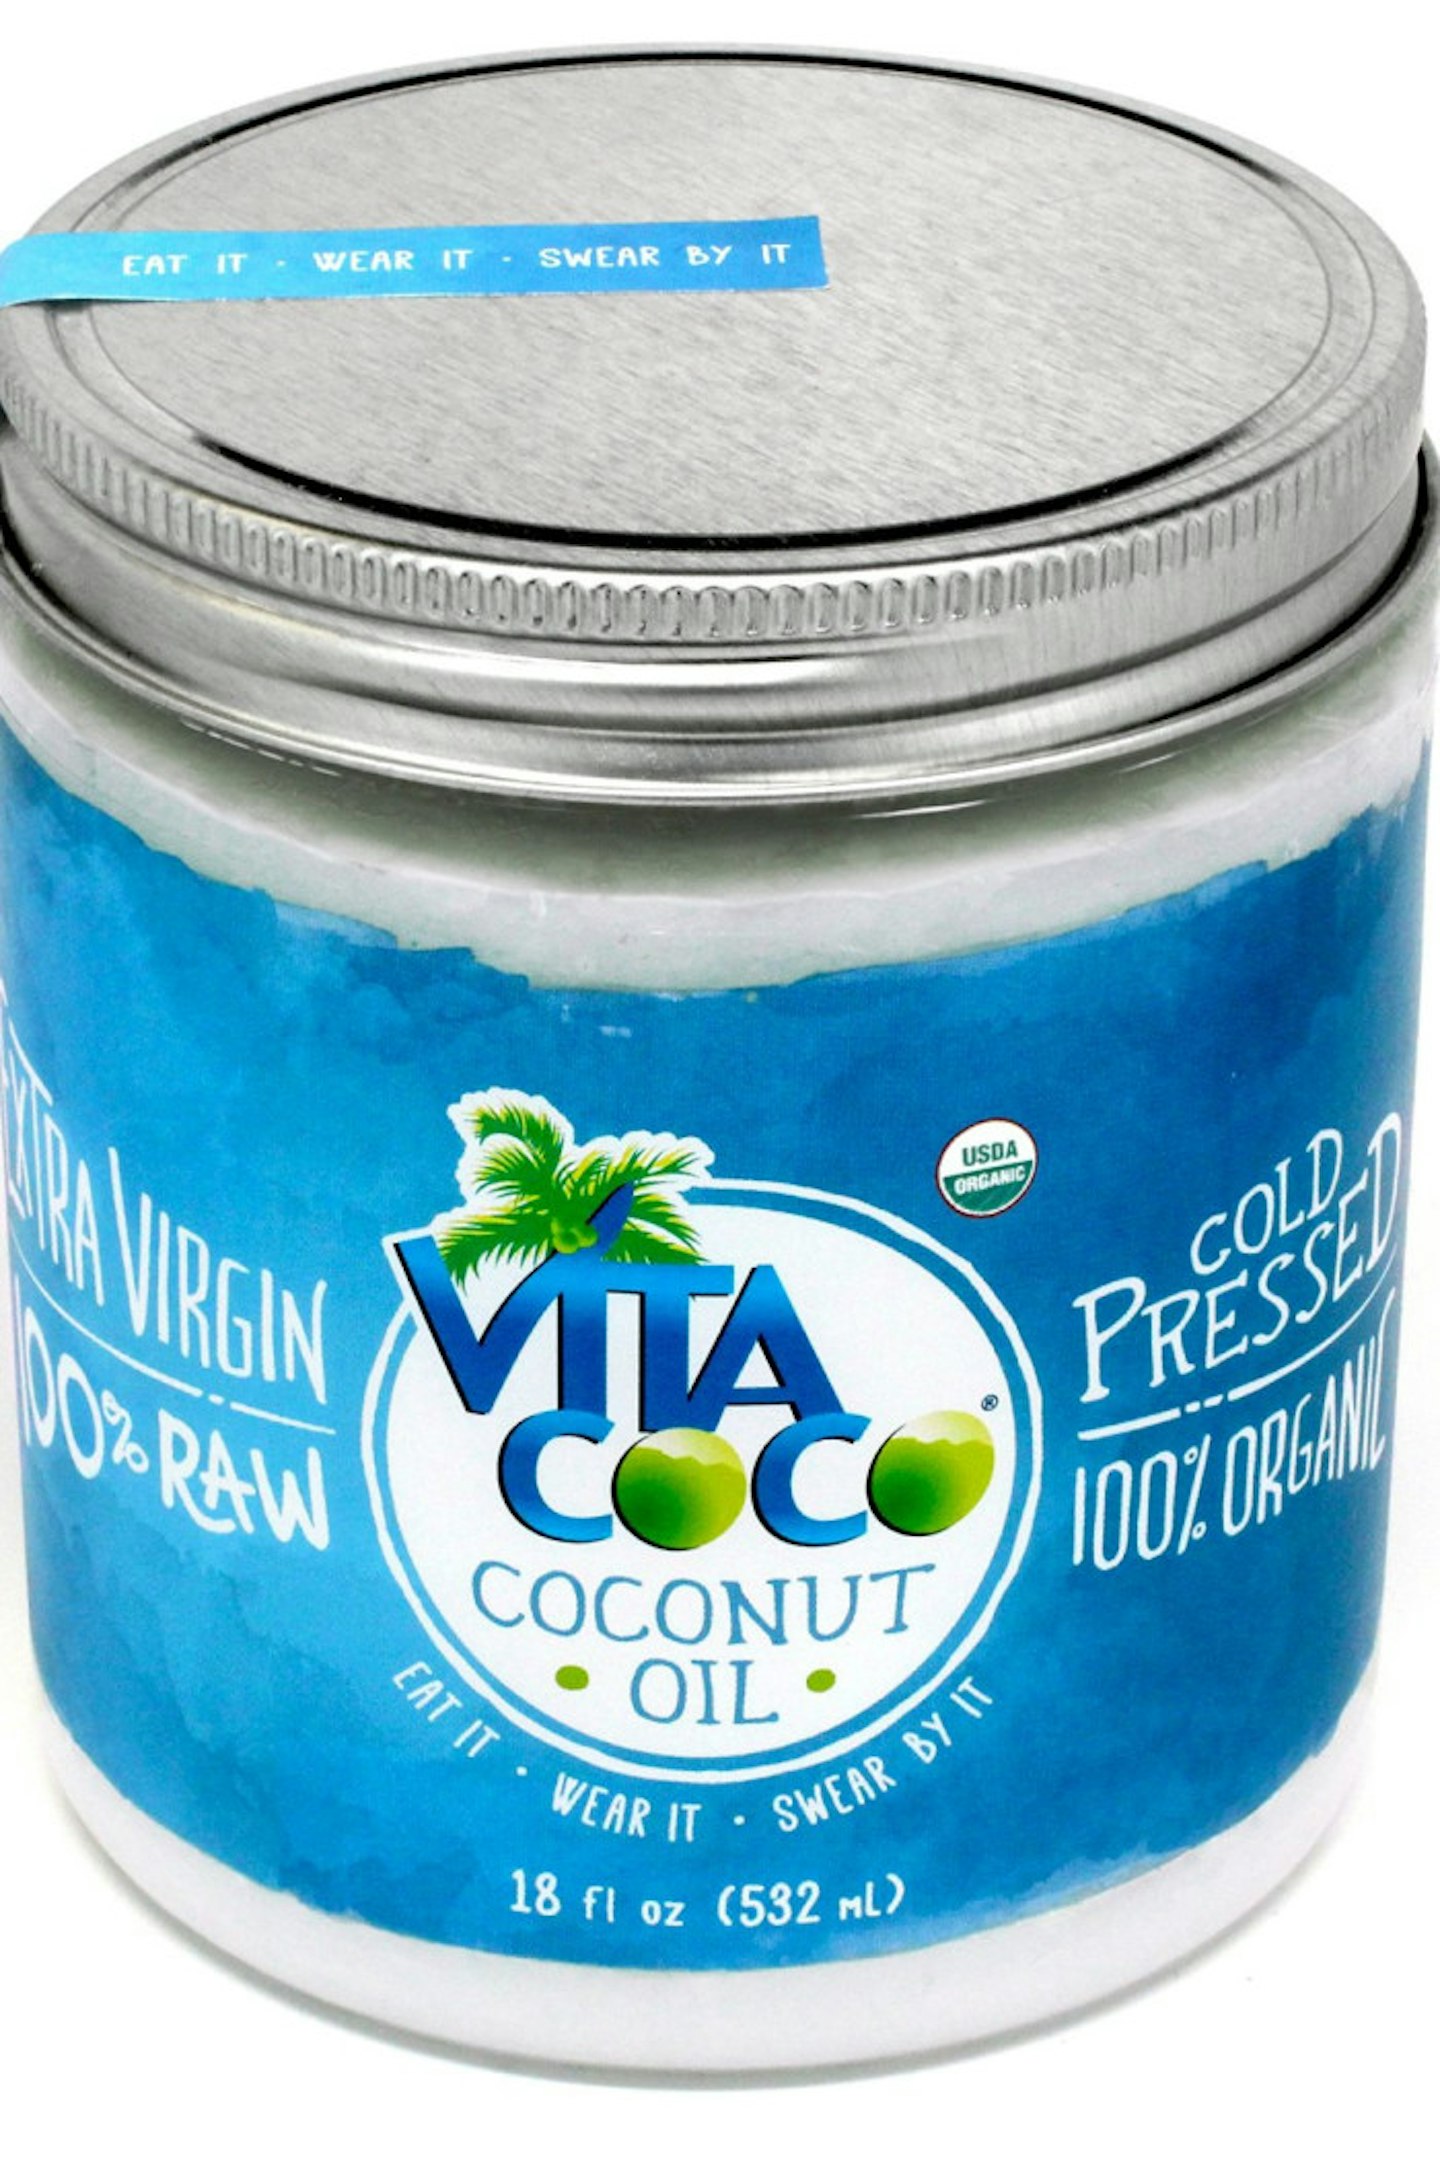 Vita Coco Coconut Oil, £10.00, www.thisisbeautymart.com